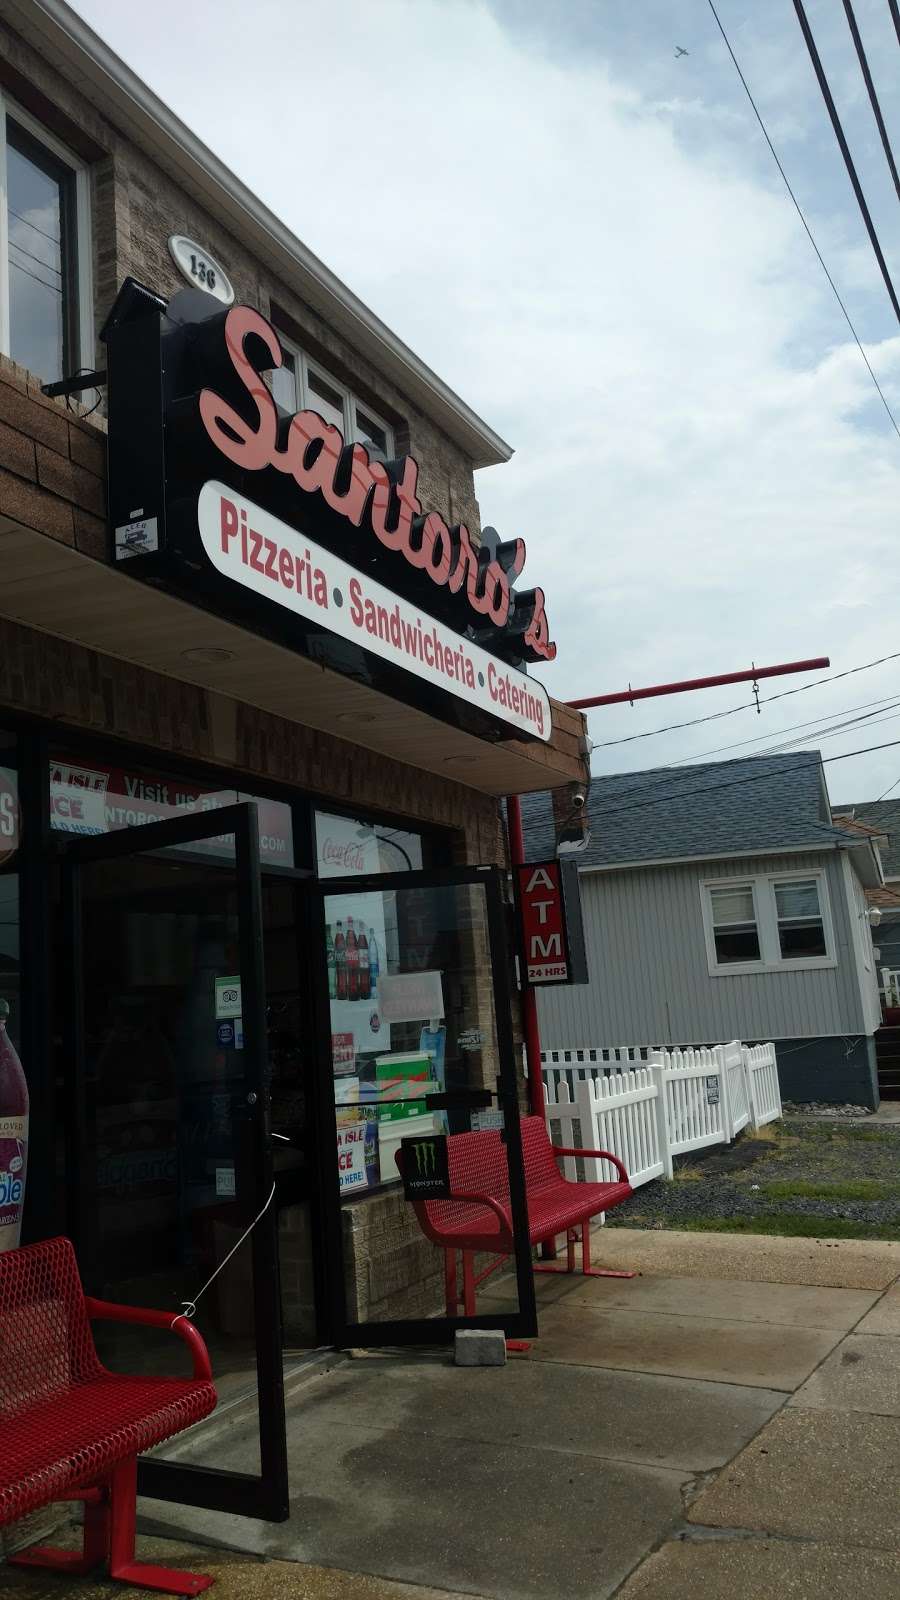 Santoros Pizzeria | 3160, 136 Ocean Ave, Point Pleasant Beach, NJ 08742, USA | Phone: (732) 714-6243